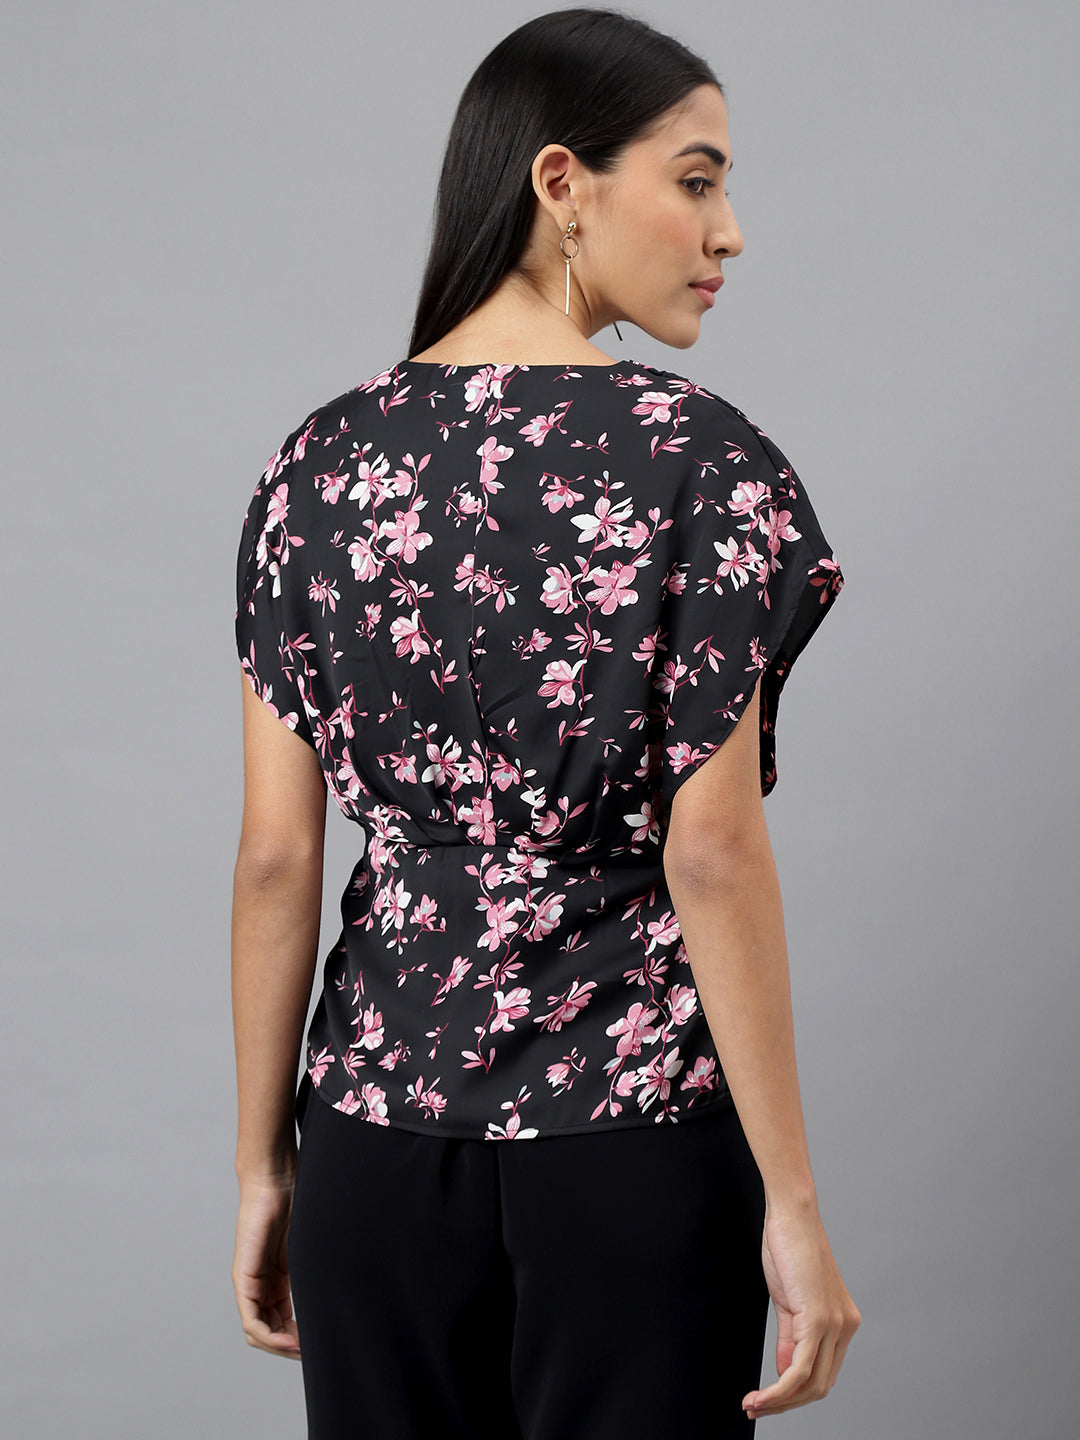 Black Cap Sleeve V-Neck Floral Print Blouse Top